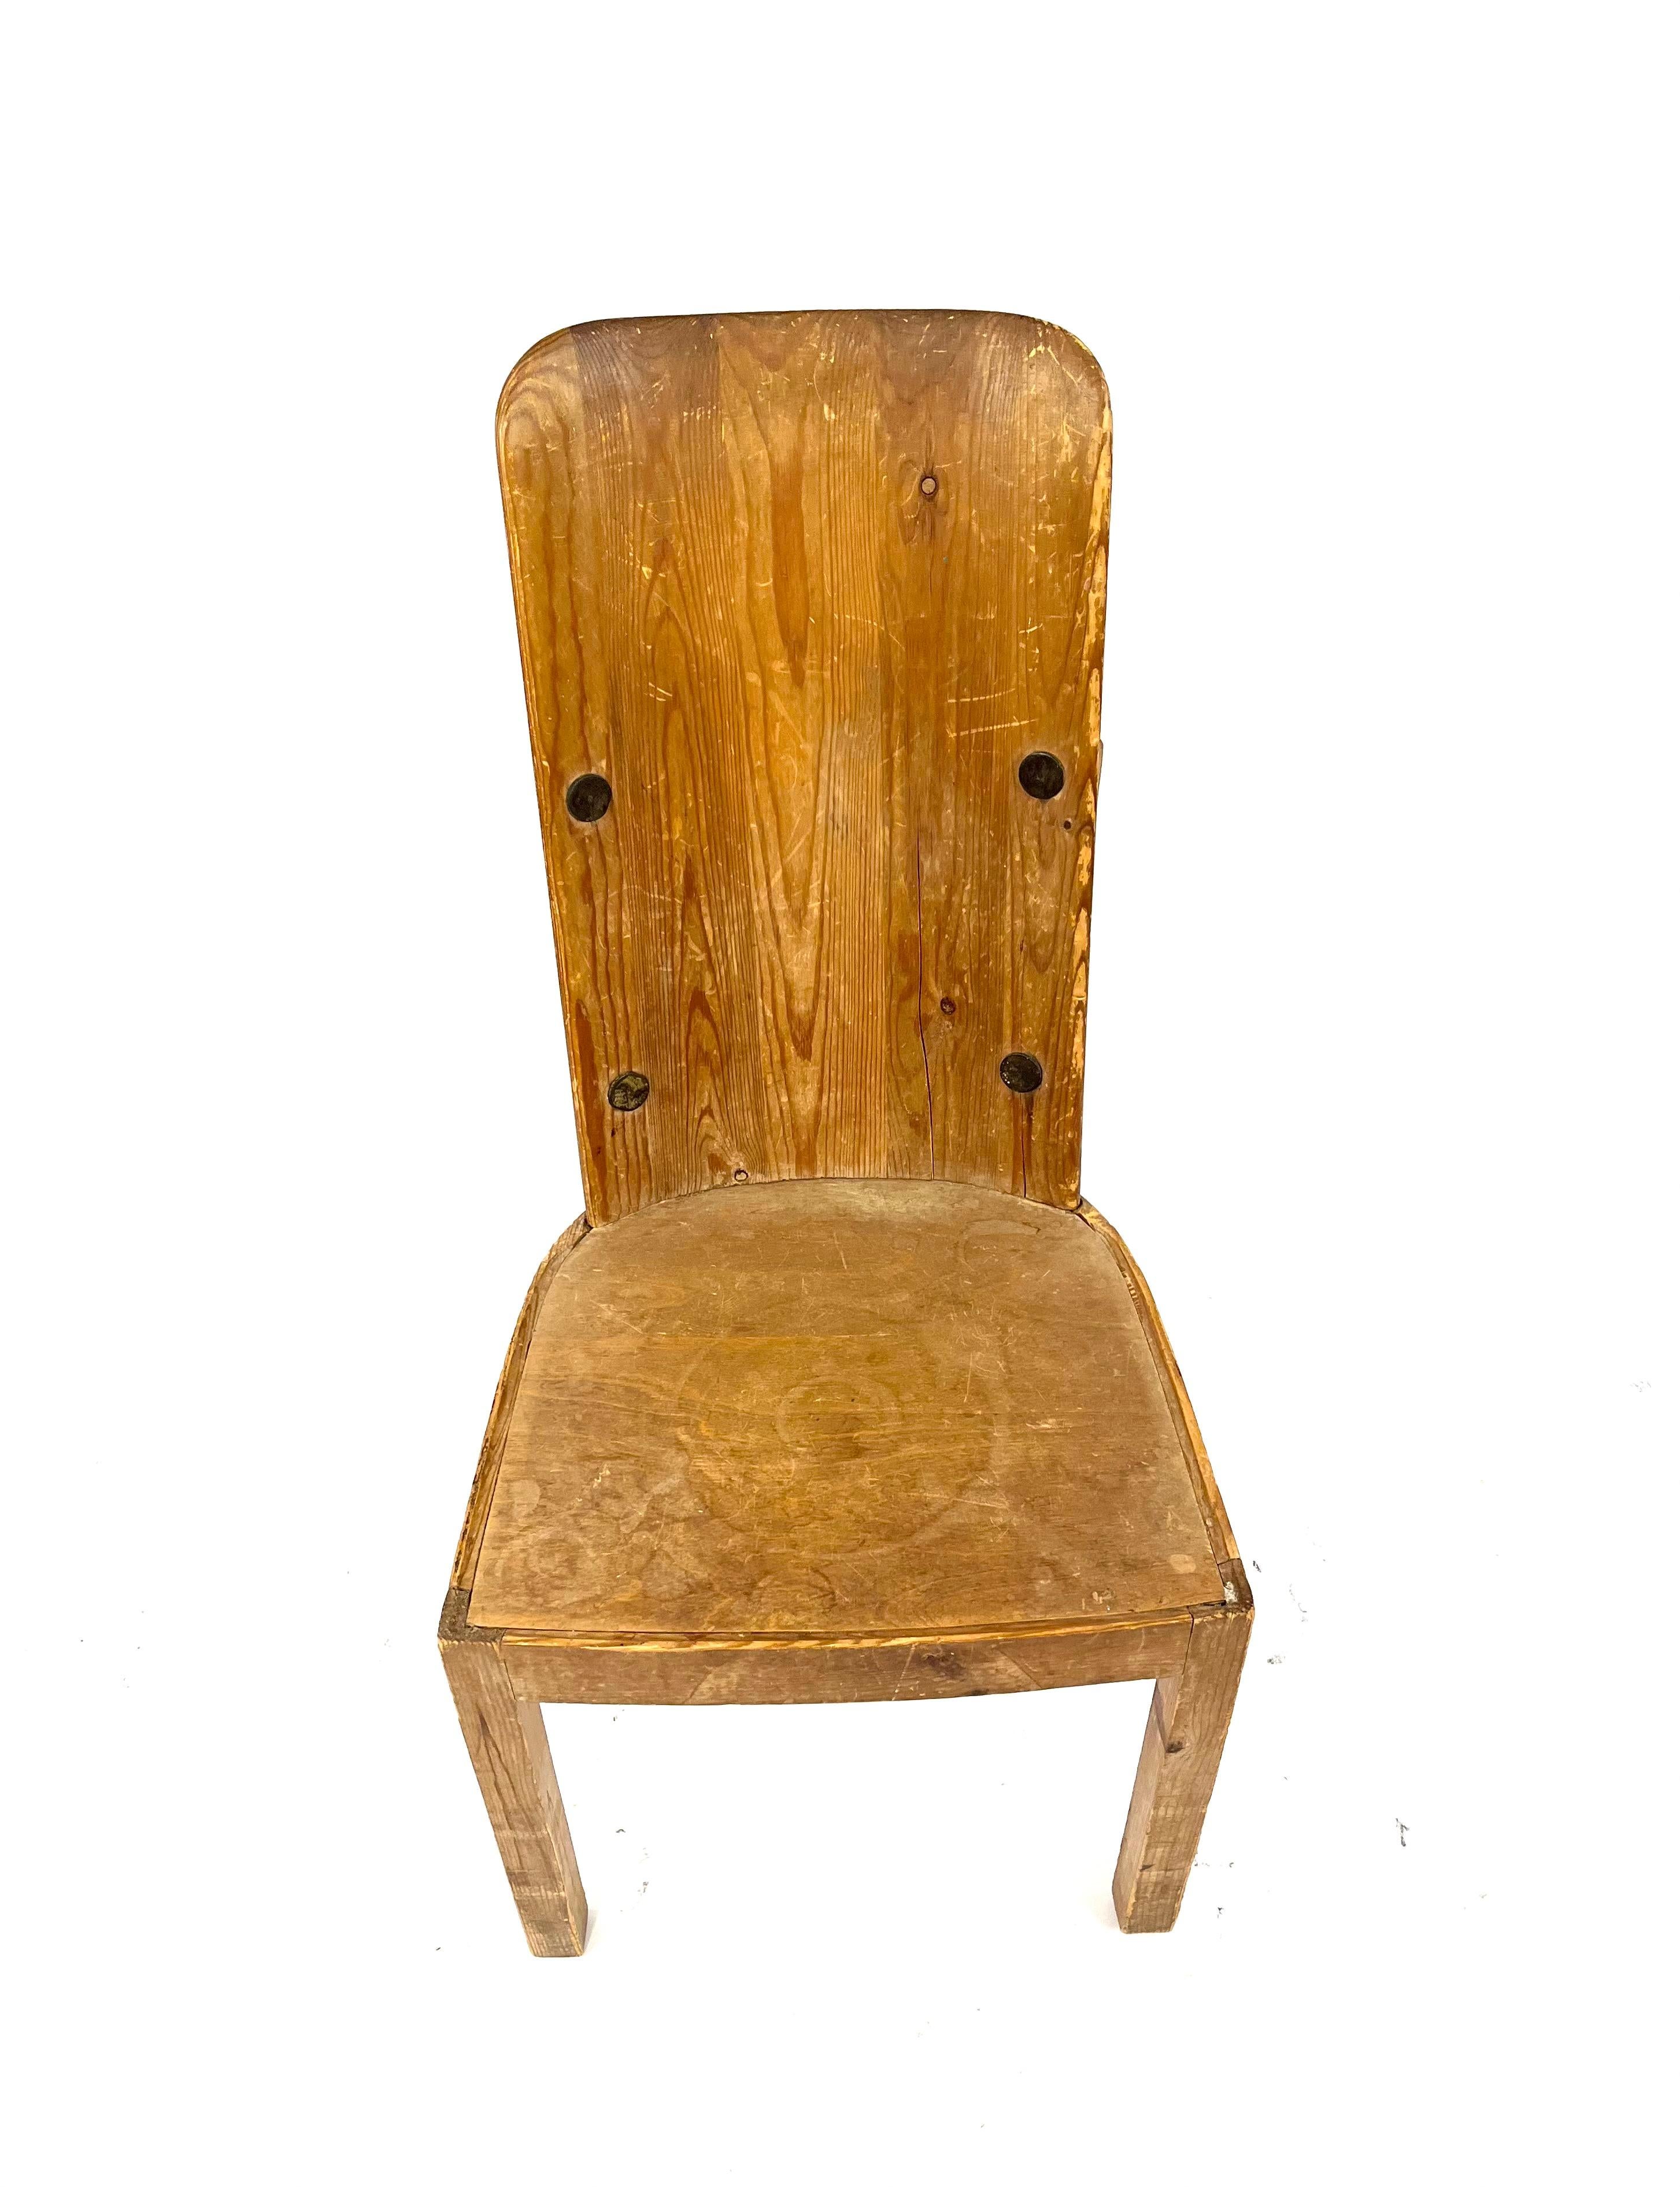 Pine Lovö chair by Axel Einar Hjort for Nordiska Kompaniet 1930s For Sale